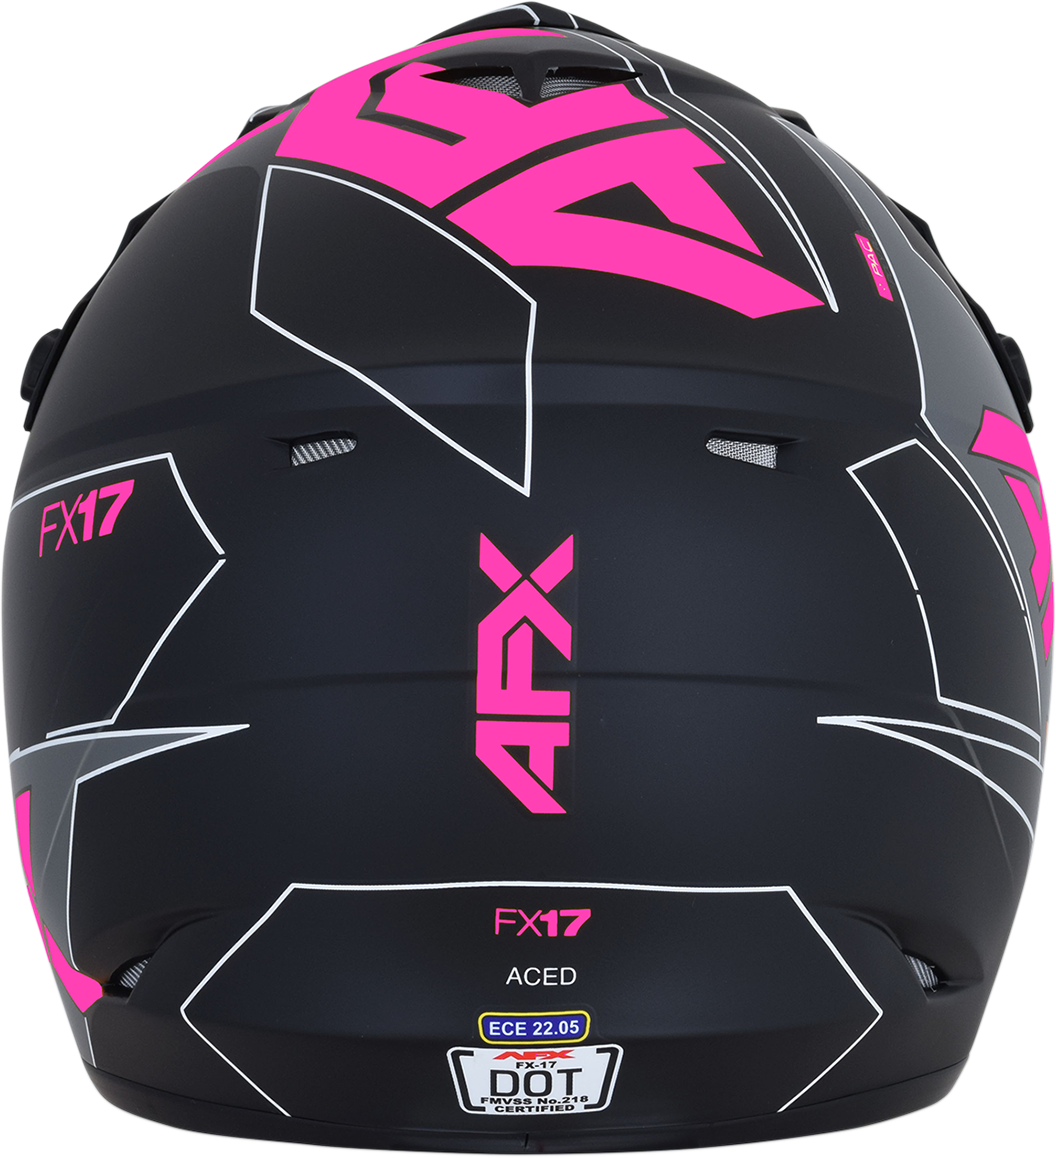 AFX FX-17 Helmet - Aced - Matte Black/Pink - Small 0110-6510